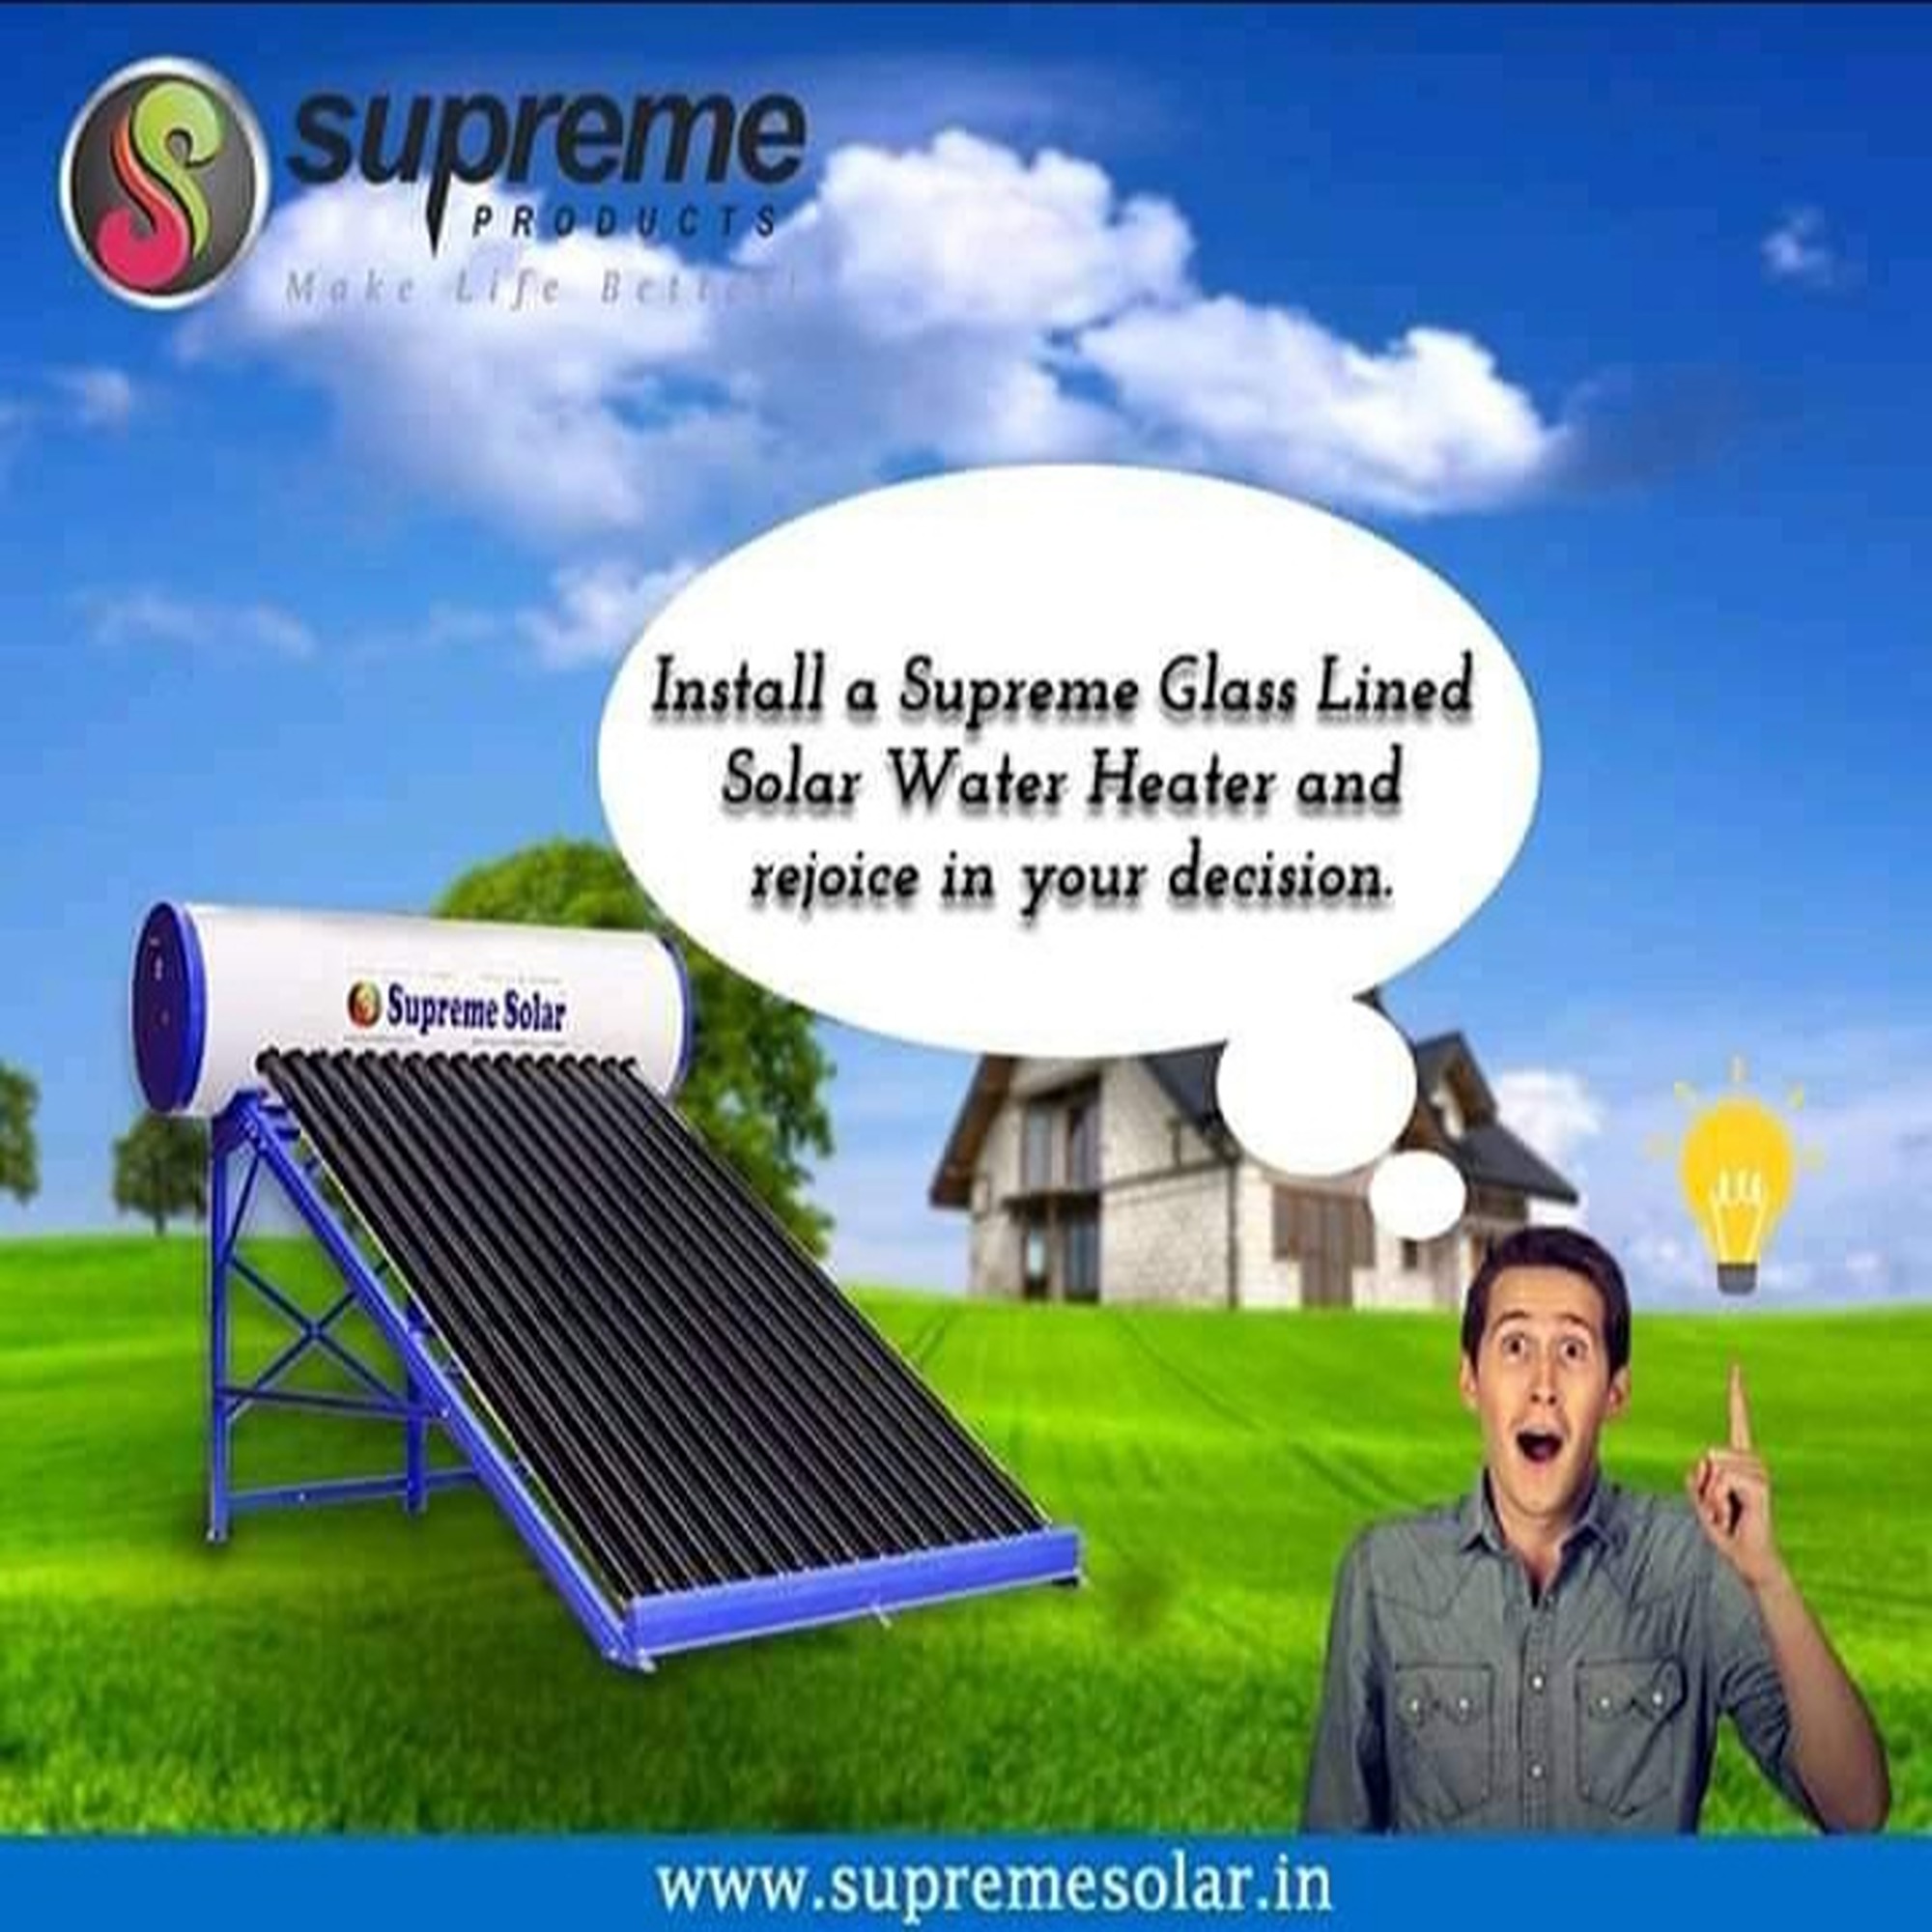 Supreme Solar 110 Ltr GL Water Heater